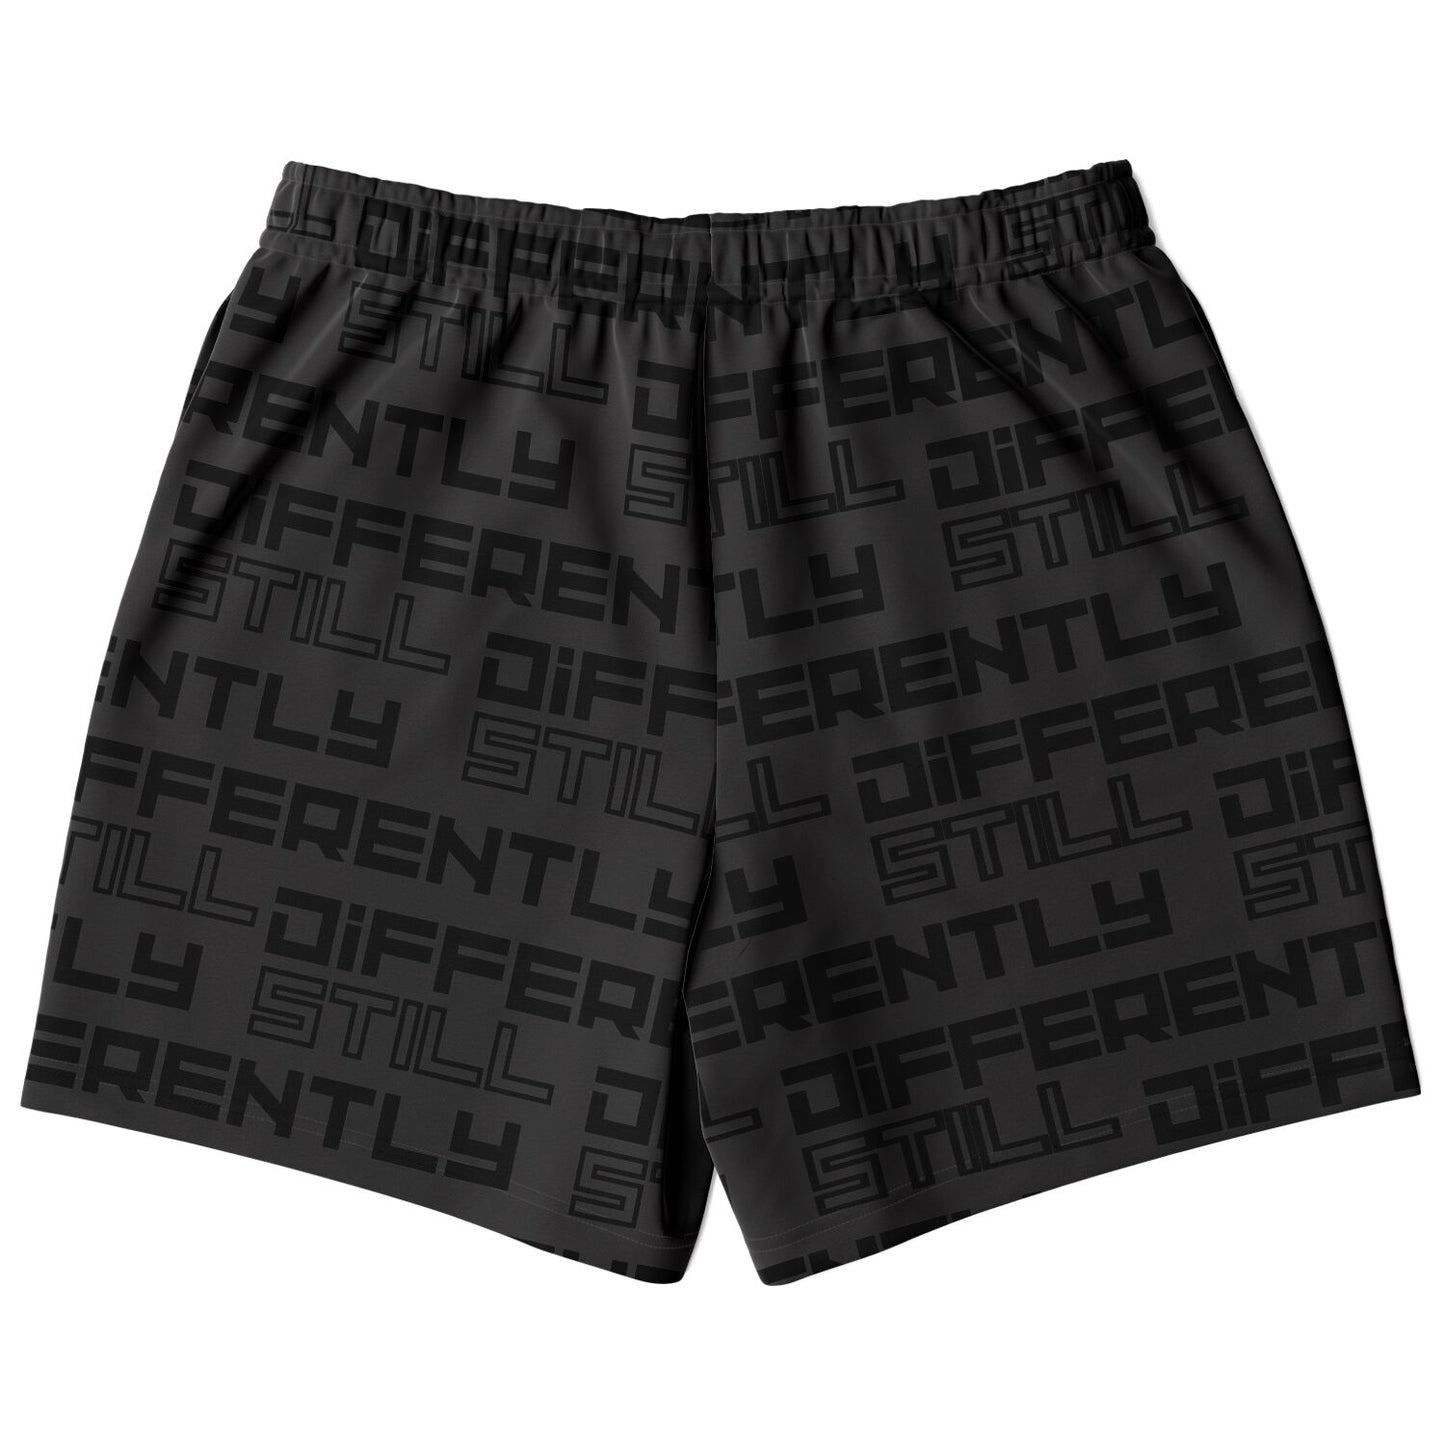 Duntalk "Differently" Basketball Mid Shorts -  Black